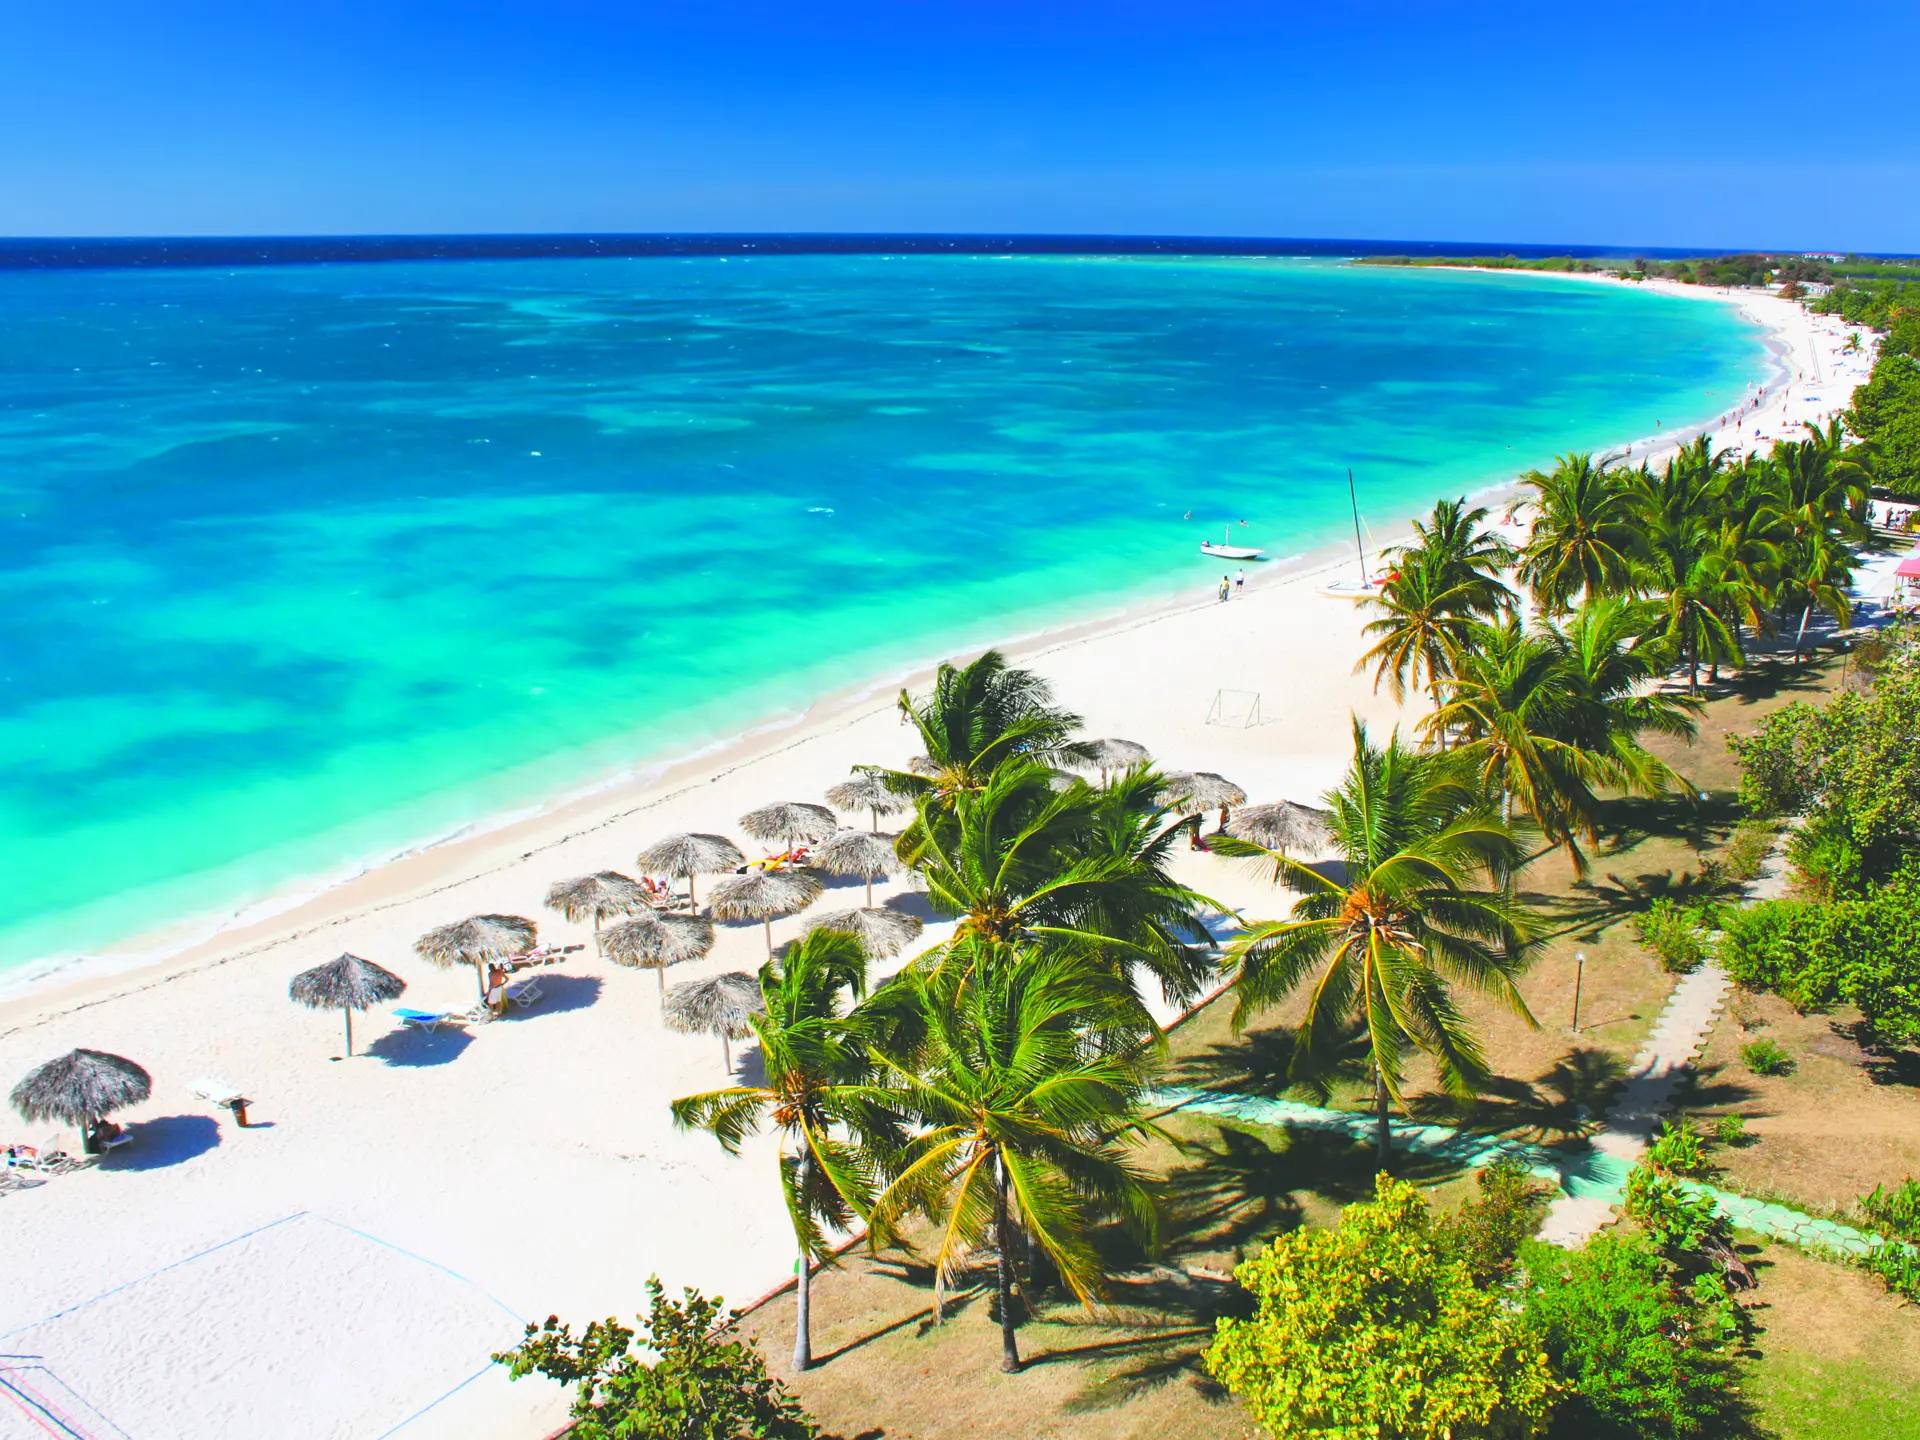 Beautiful Tropical Beach At The Caribbean Island Shutterstock 49204522 (1)